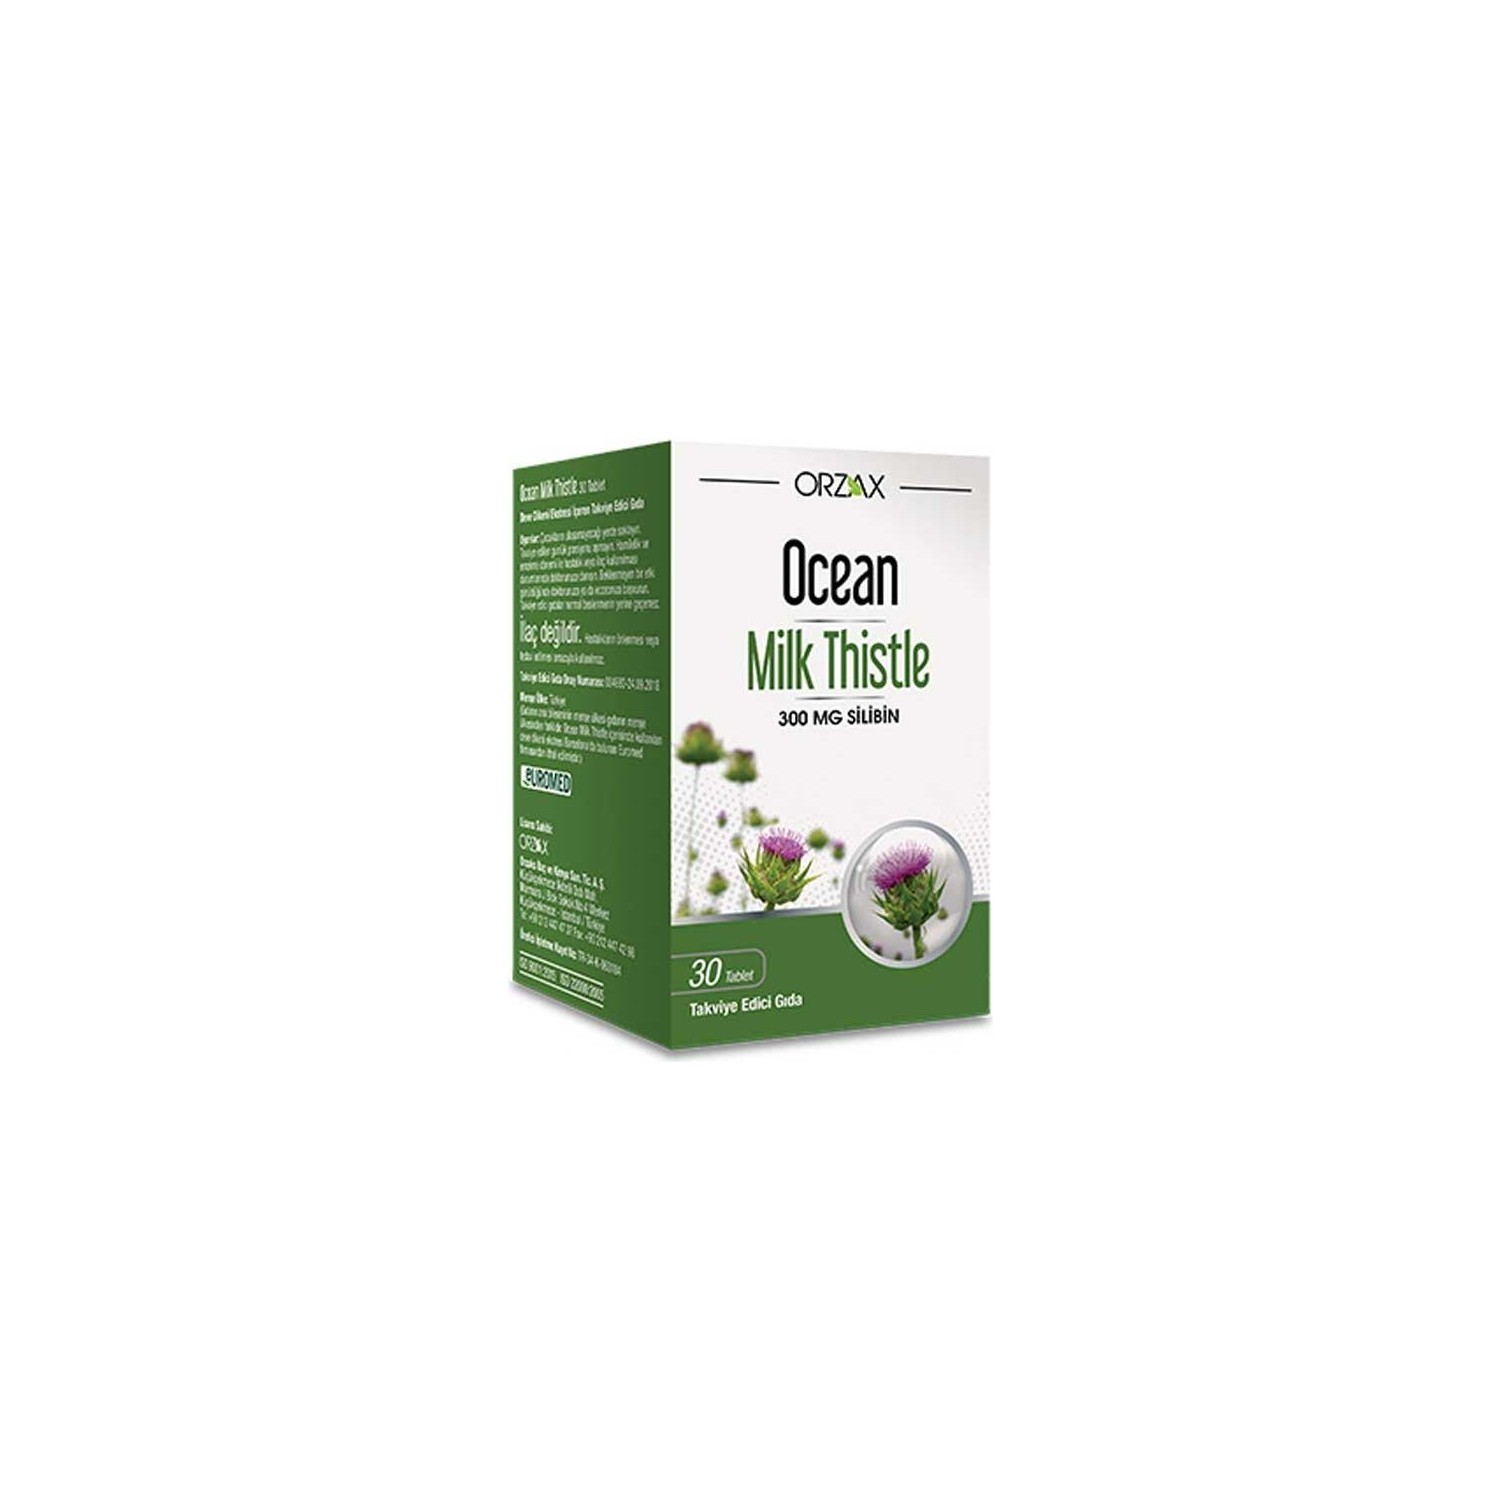 Пищевая добавка Orzax Ocean Milk Thistle Supplementary Food, 30 таблеток laperva milk thistle silymarin 80% 900 mg 60 tablets